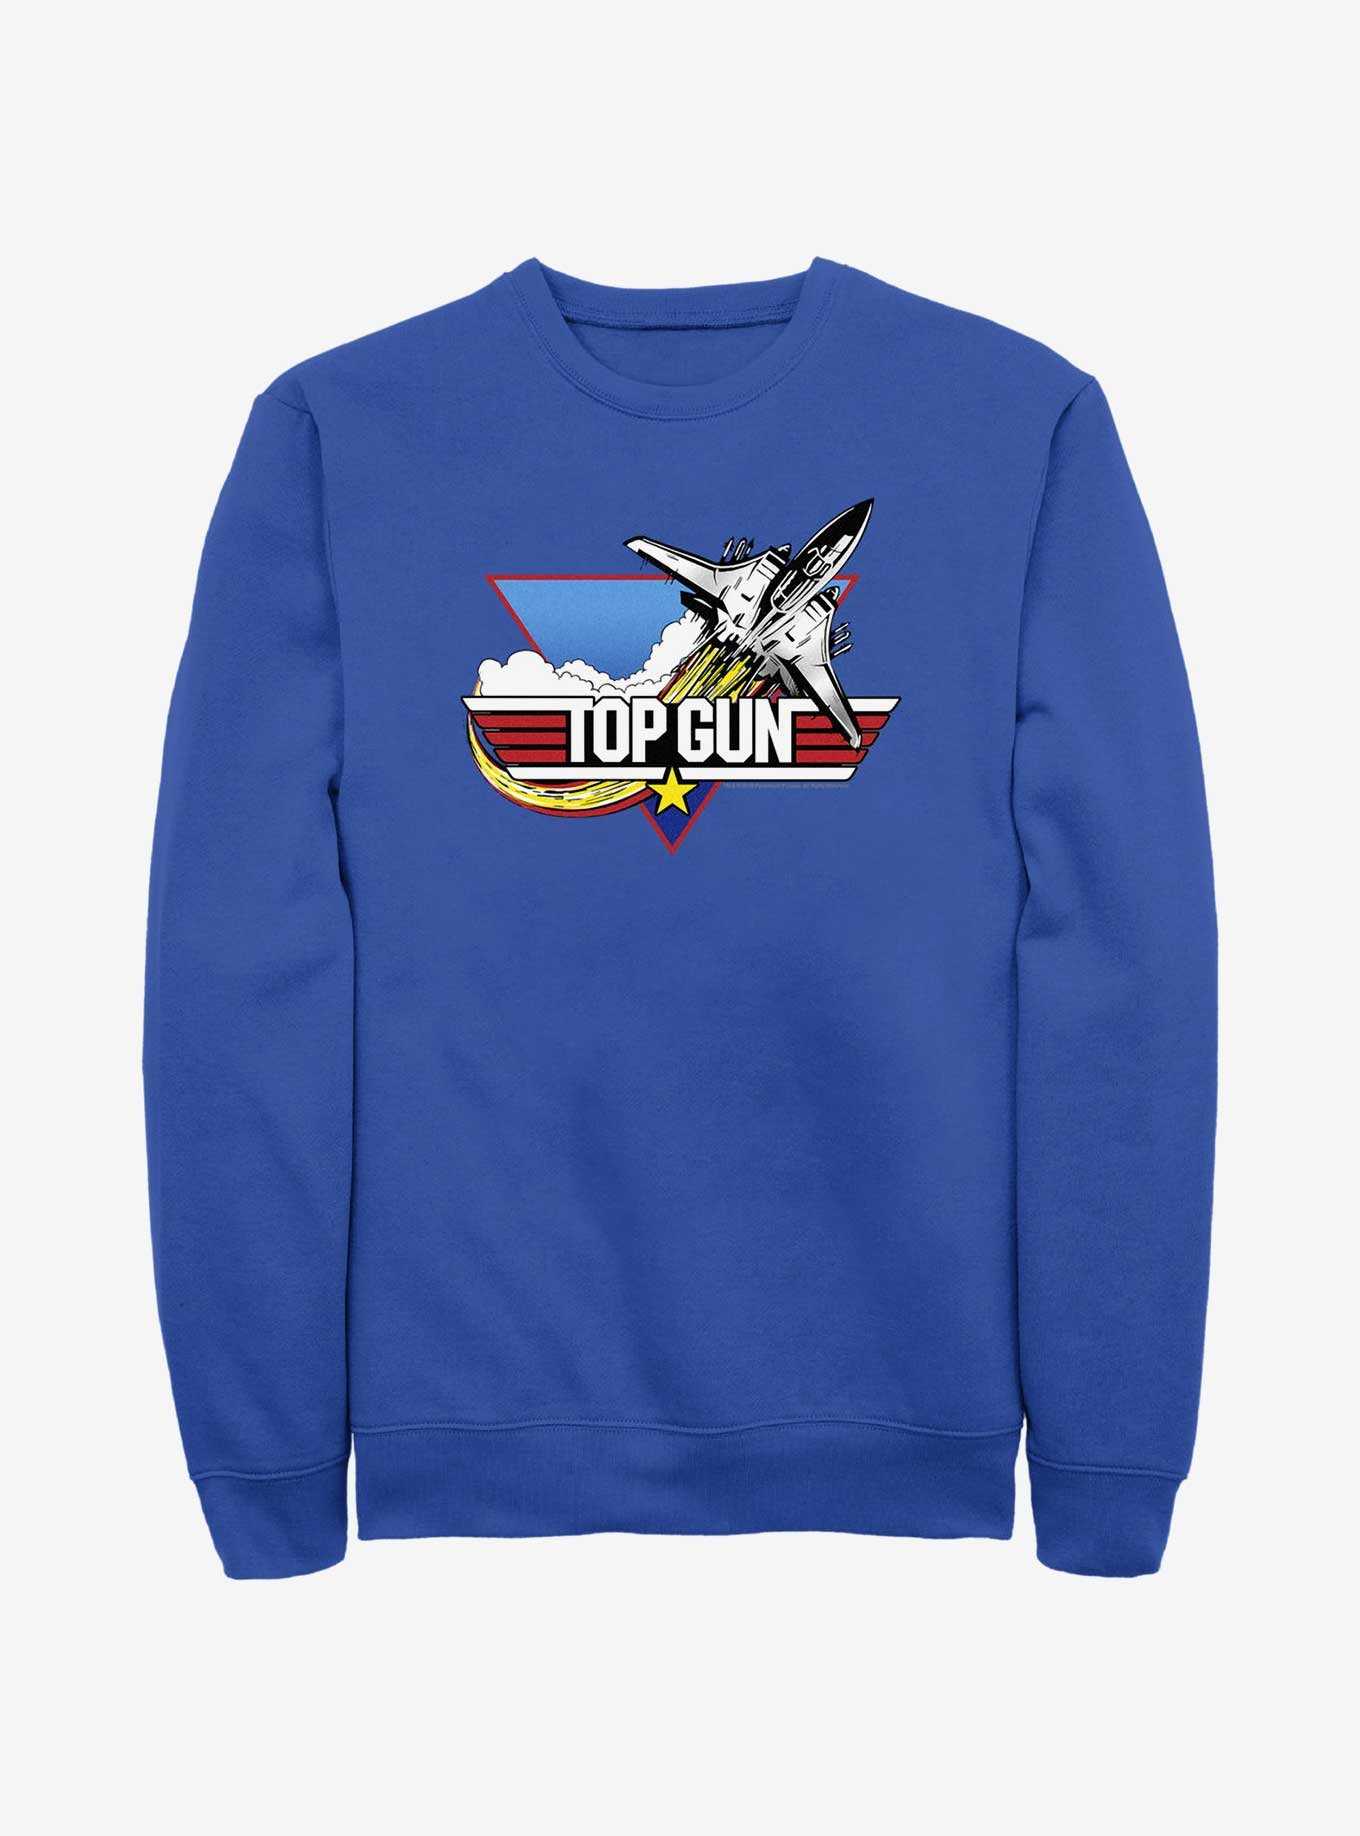 OFFICIAL Top Gun Hoodies & Sweaters Hot Topic 